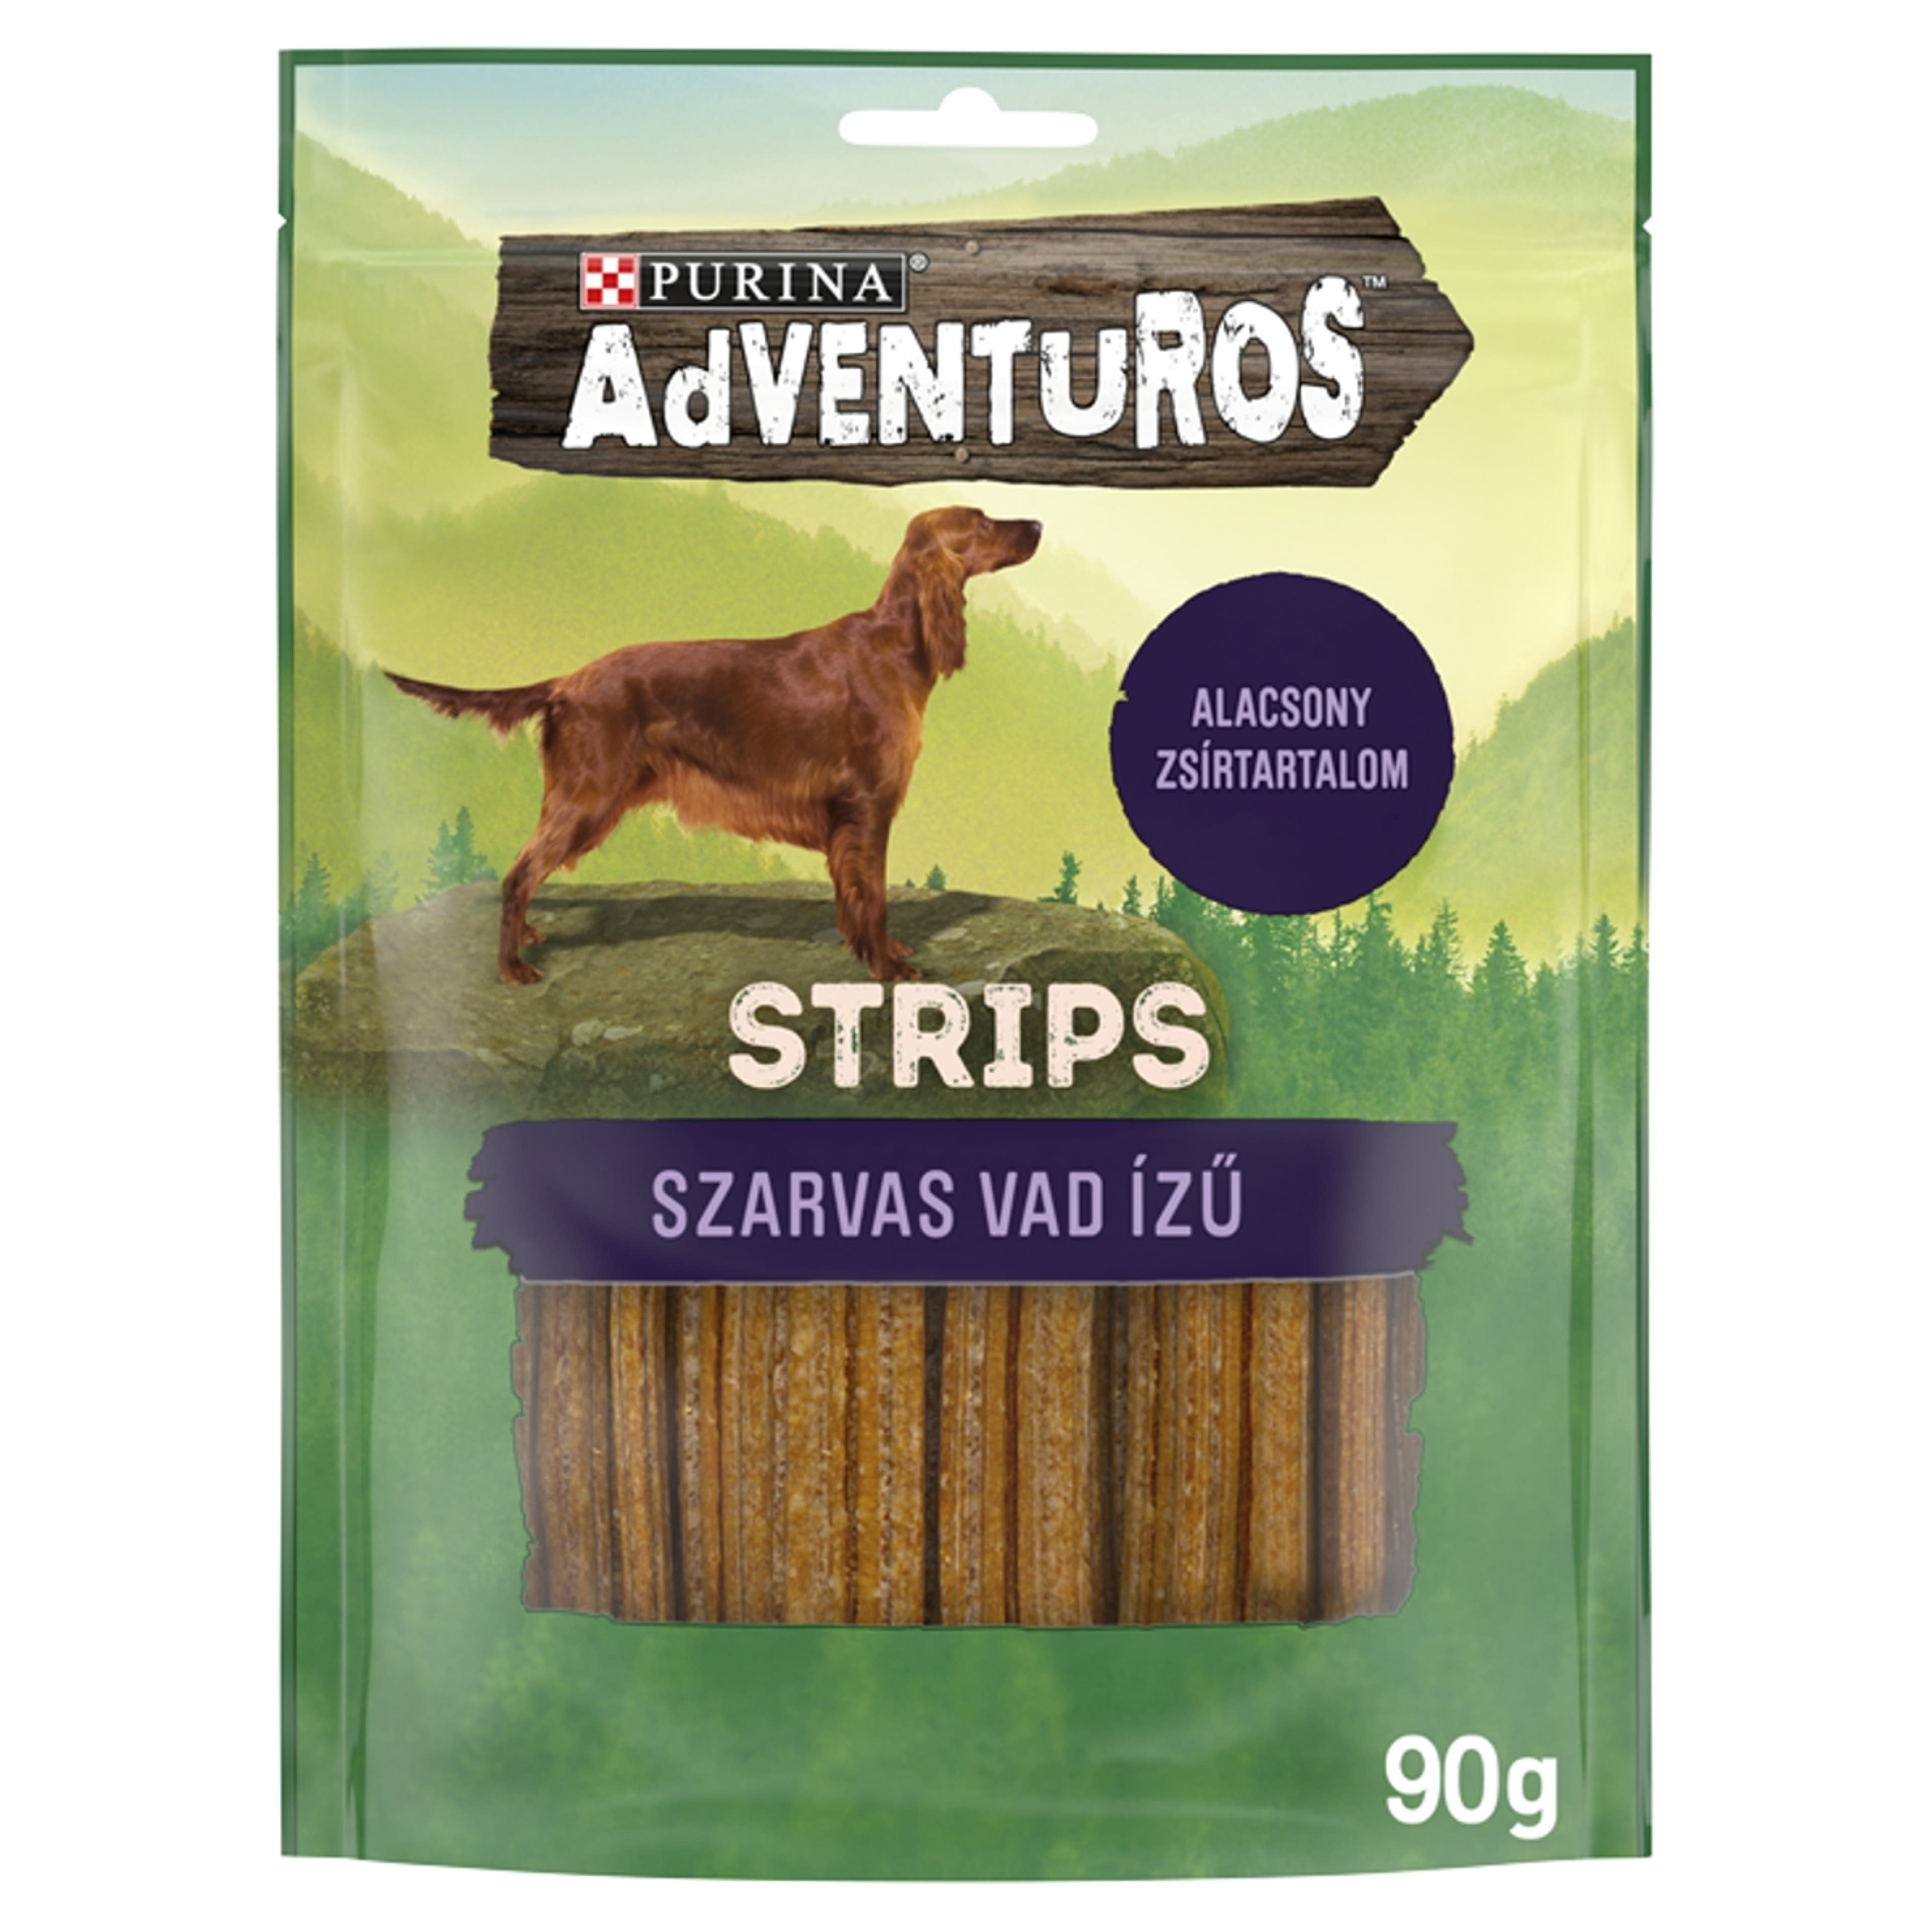 Purina Adventuros jutalomfalat kutyáknak, szarvas, vad ízű - 90 g-4